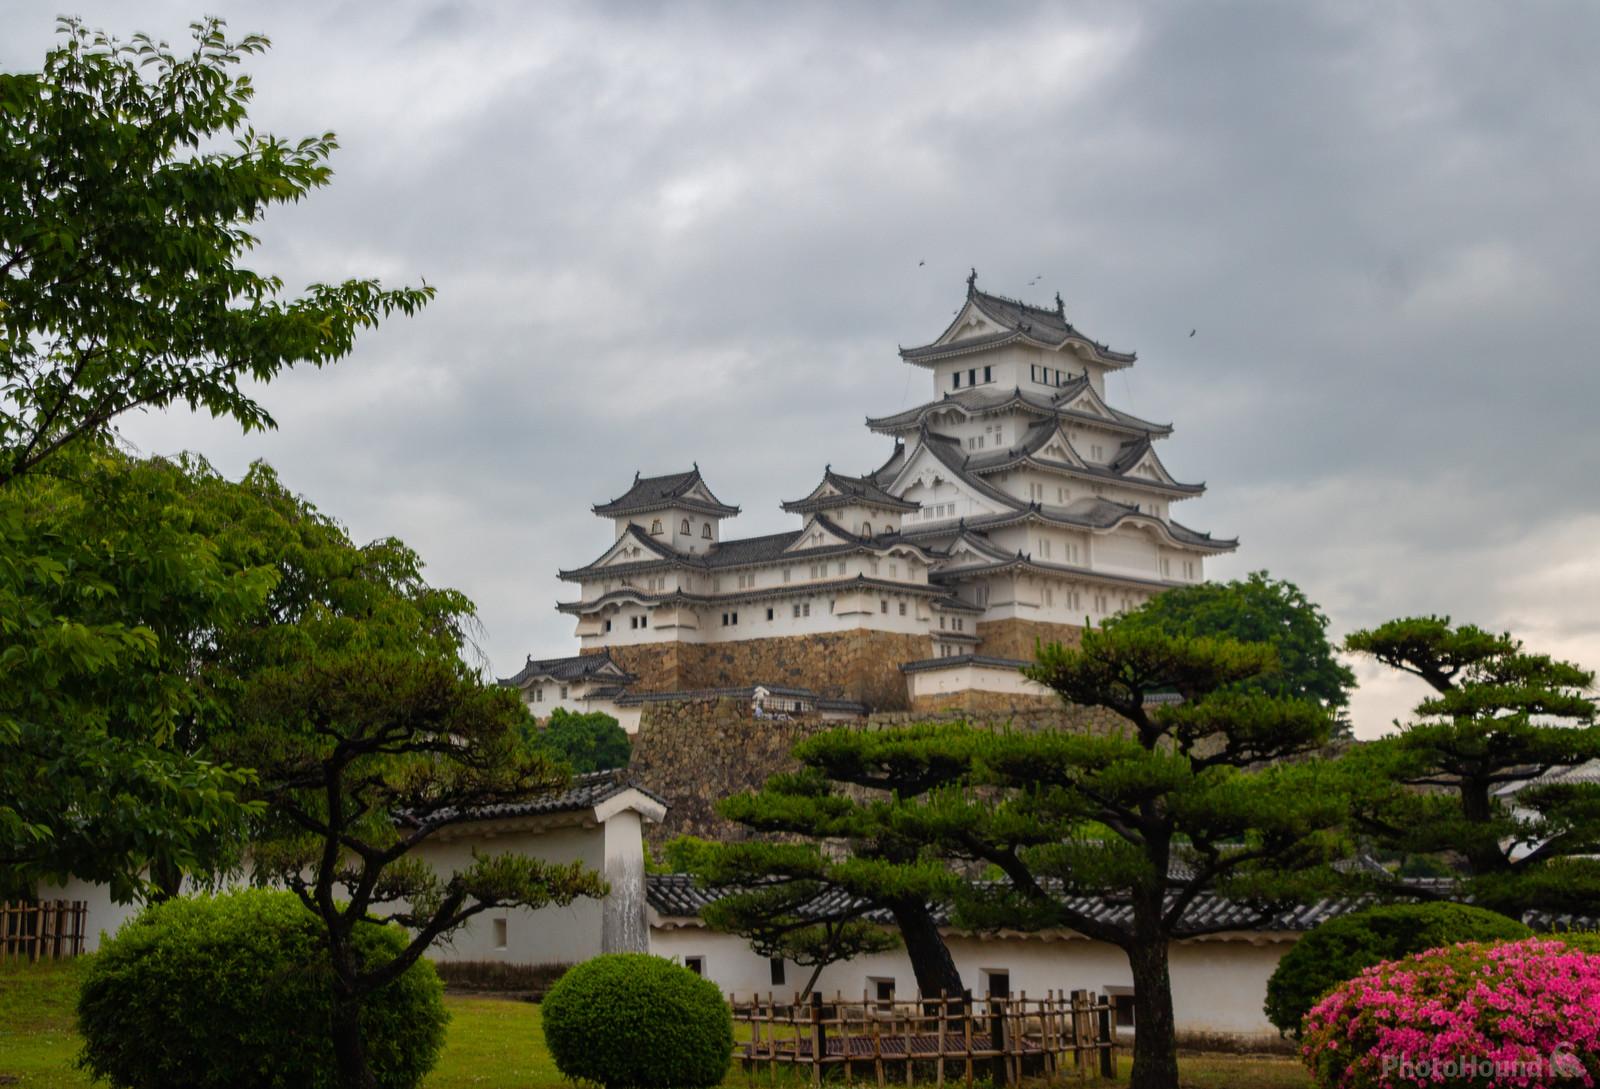 Image of Himeji Castle by Myriam M.